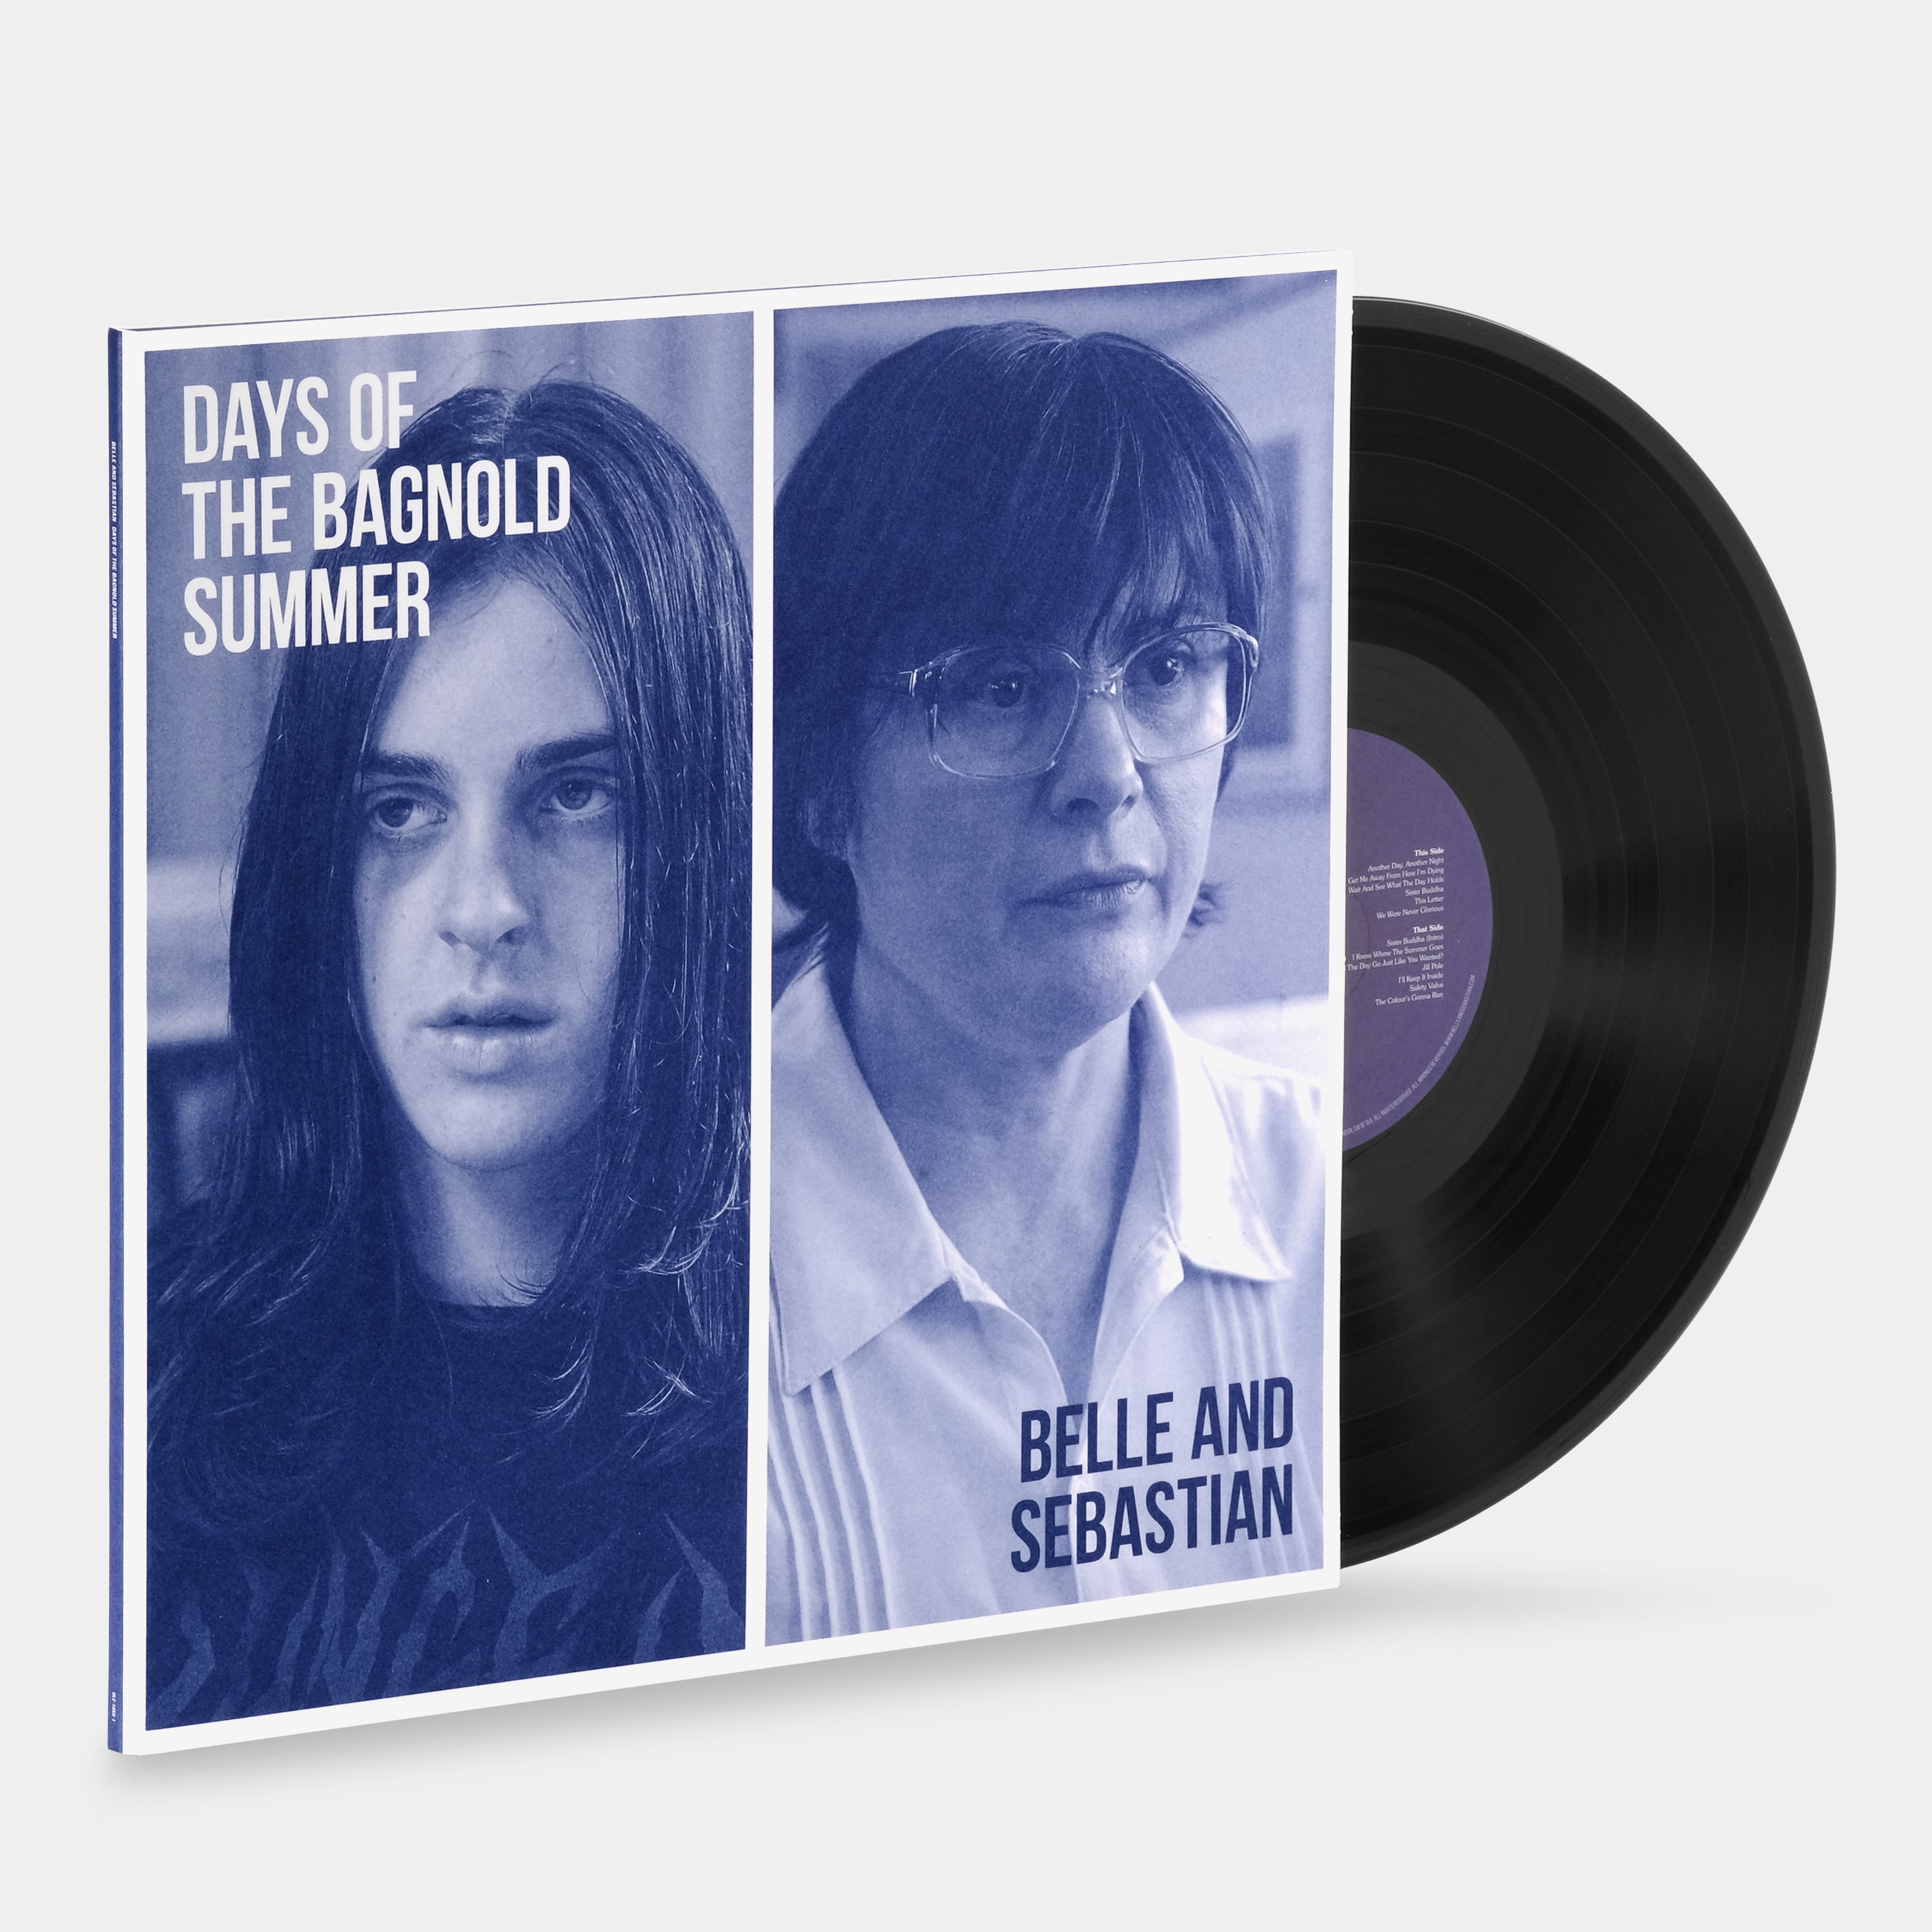 Belle And Sebastian - Days Of The Bagnold Summer LP Vinyl Record